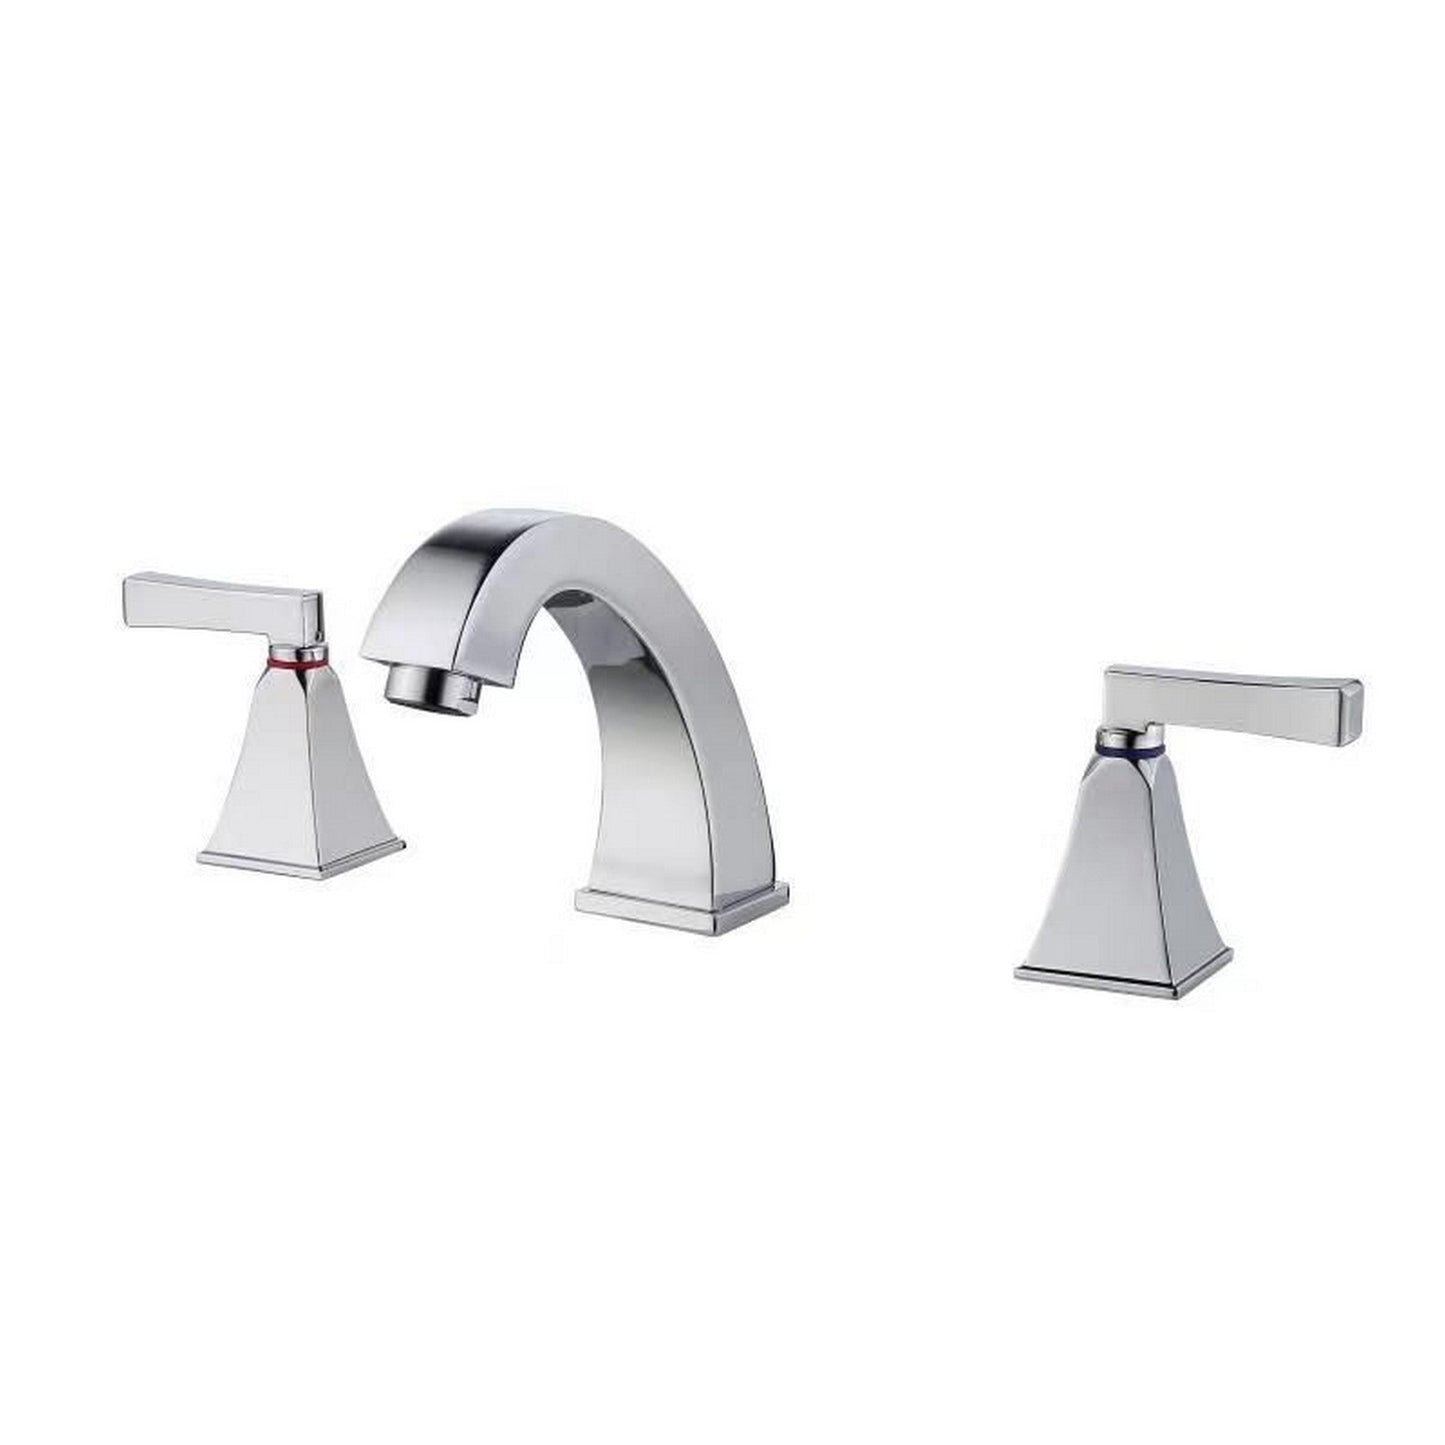 Ratel 3-Hole Chrome Widespread Bathroom Faucet